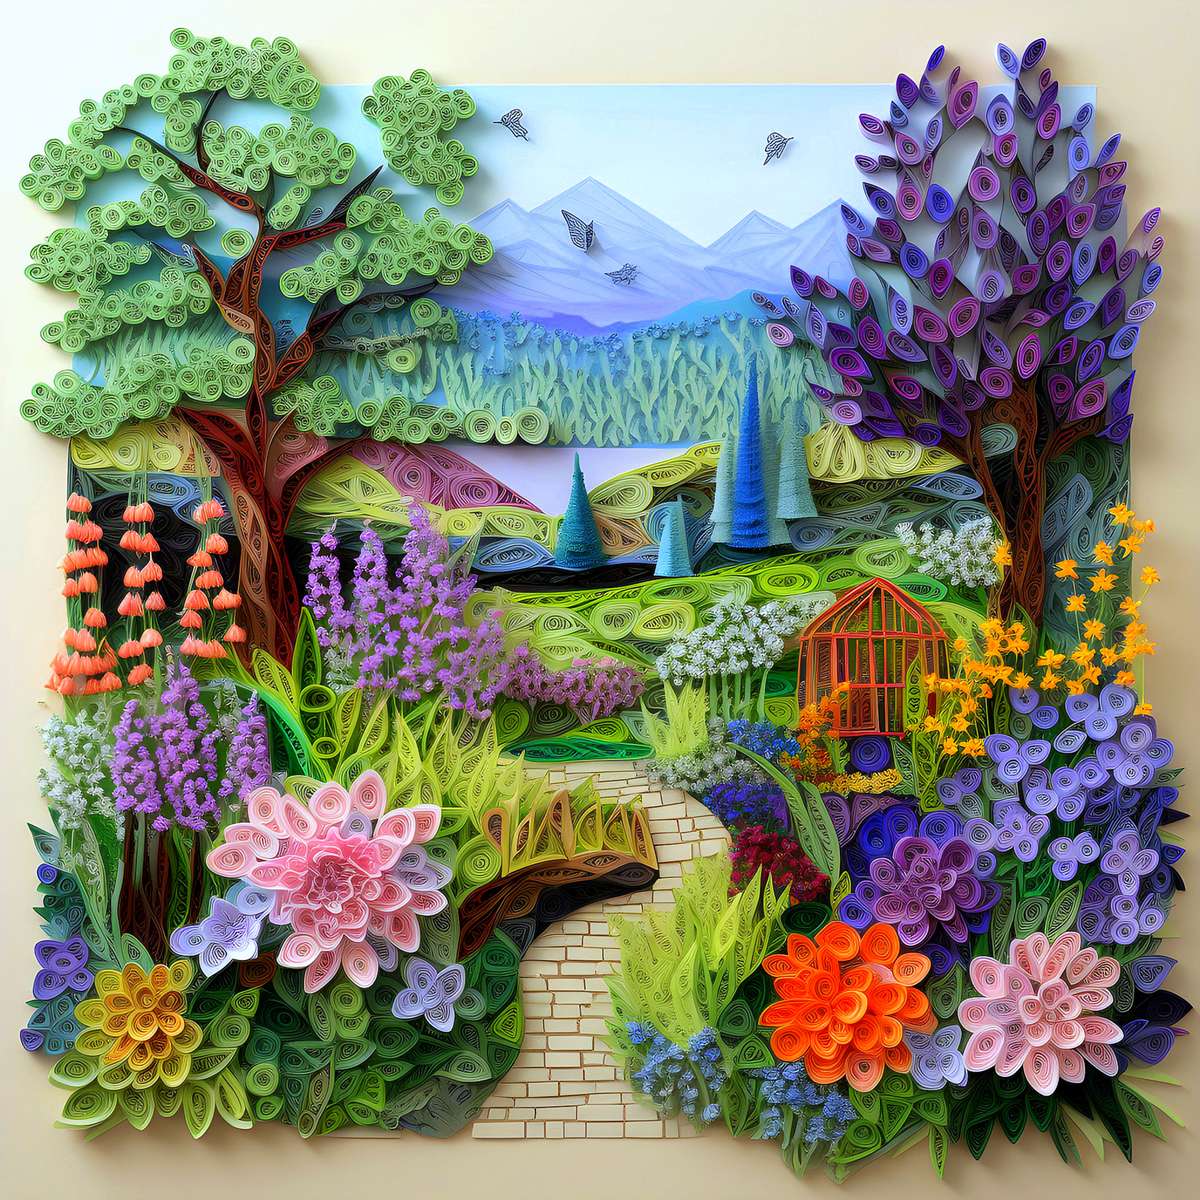 Magic Garden (imagine) jigsaw puzzle online